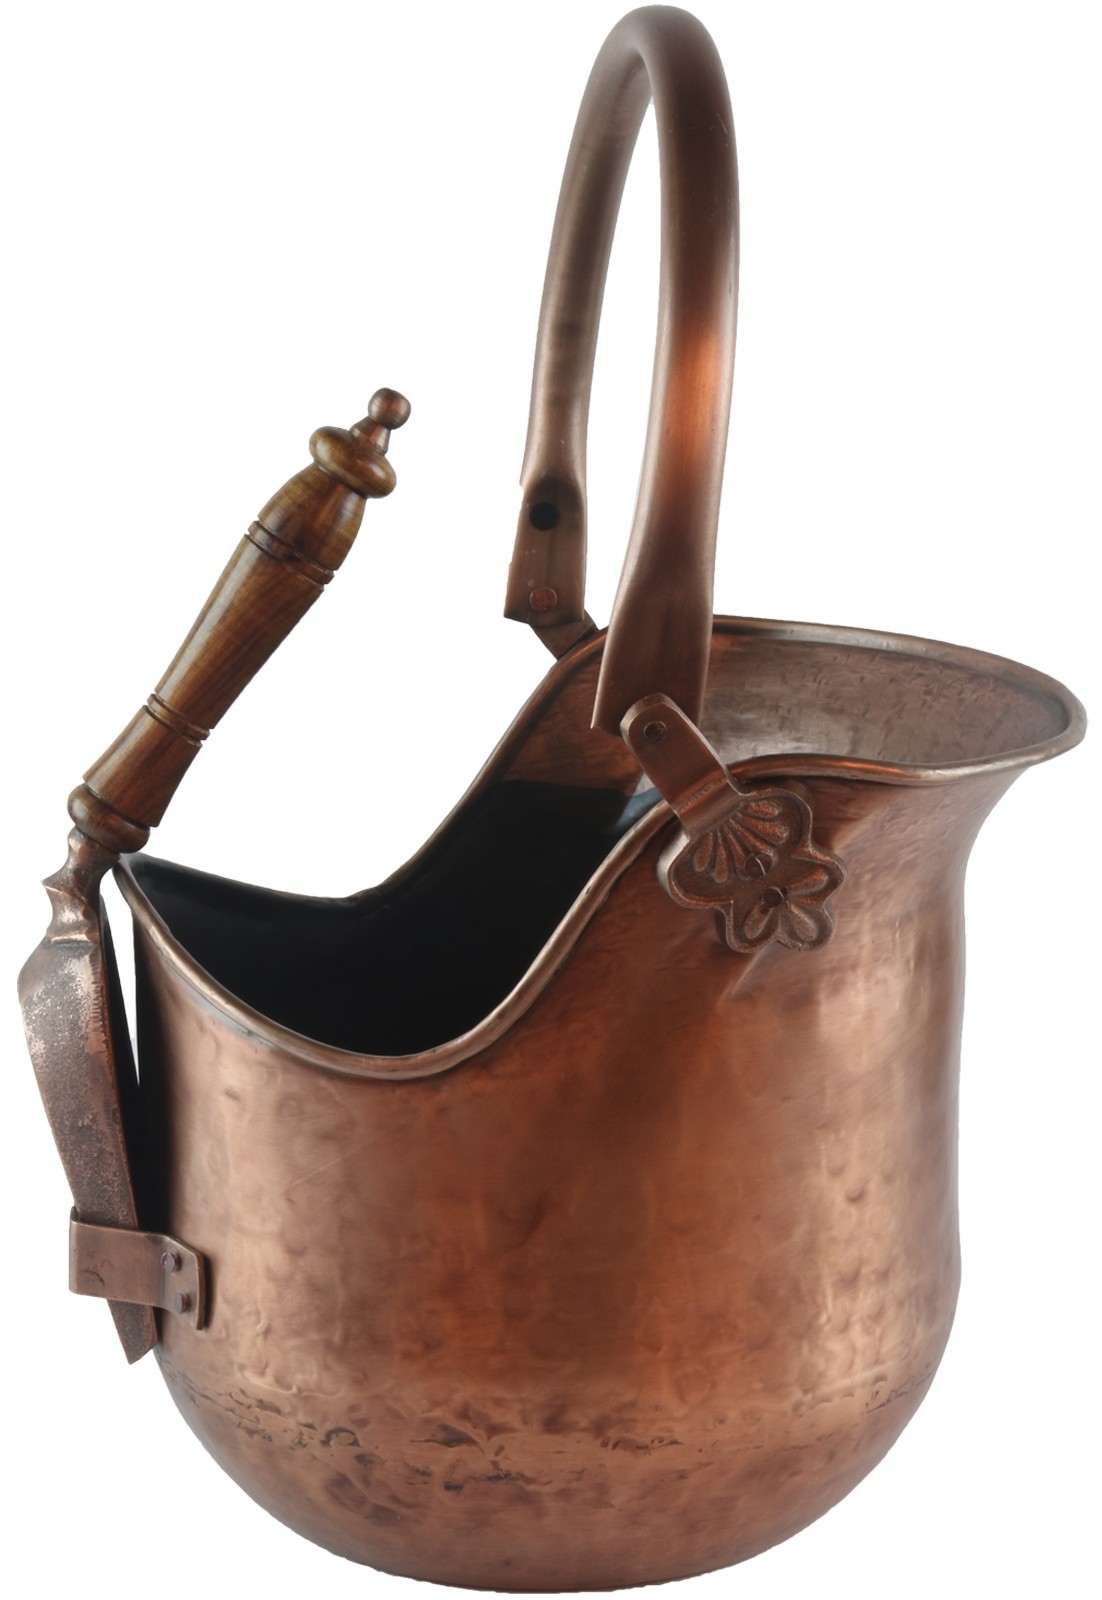 46cm Coal Bucket With Shovel - Antique Copper Finish 